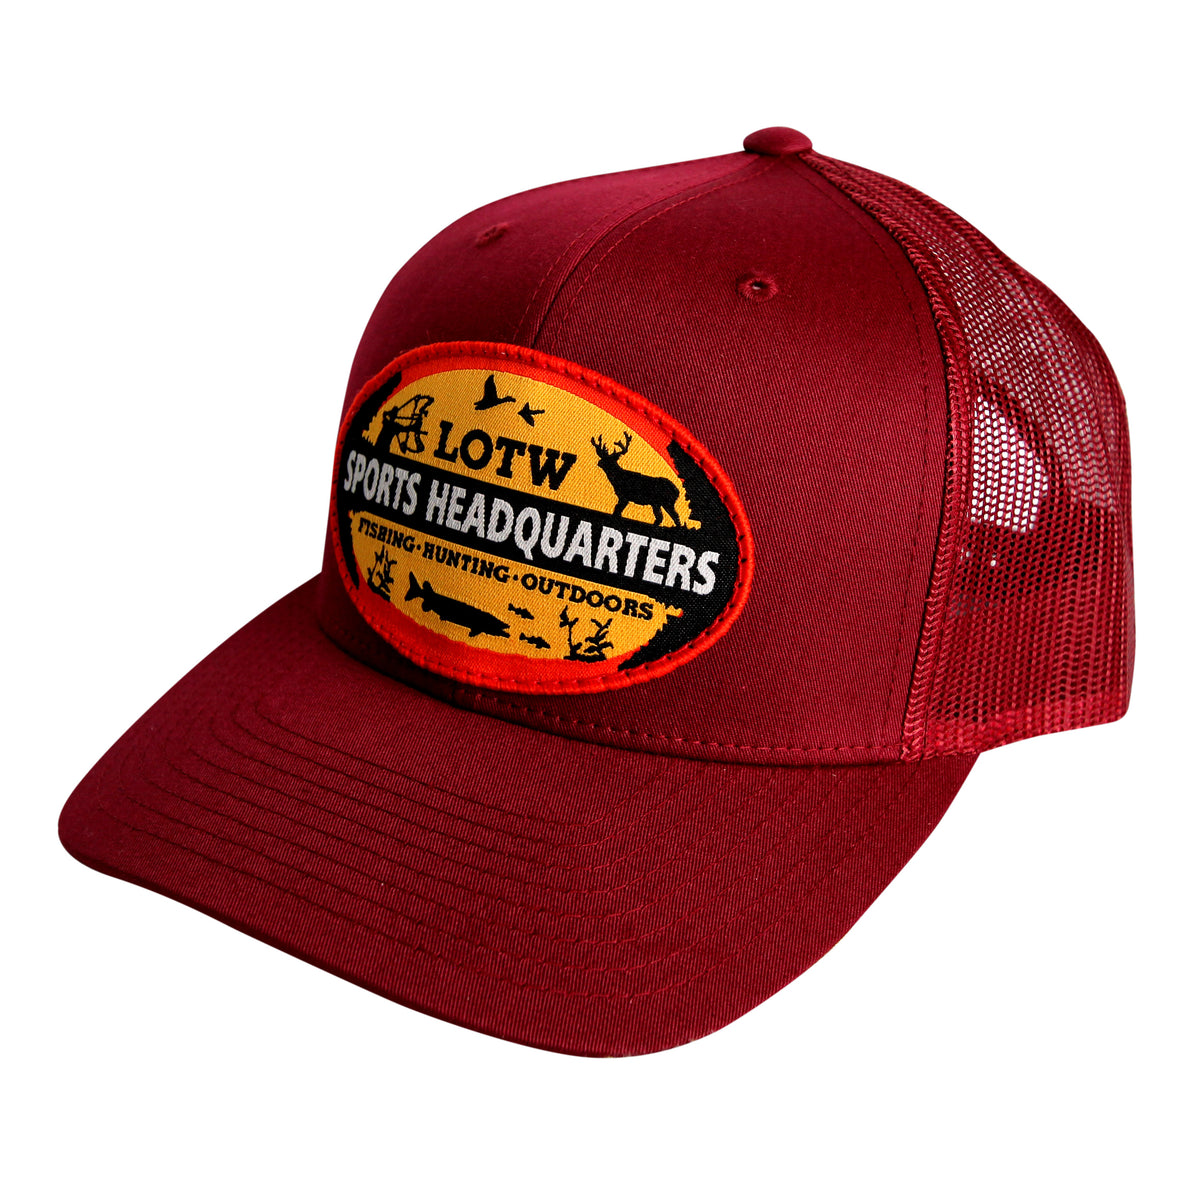 LOTW Sports Headquarters Retro Snapback Trucker Hats - Cranberry